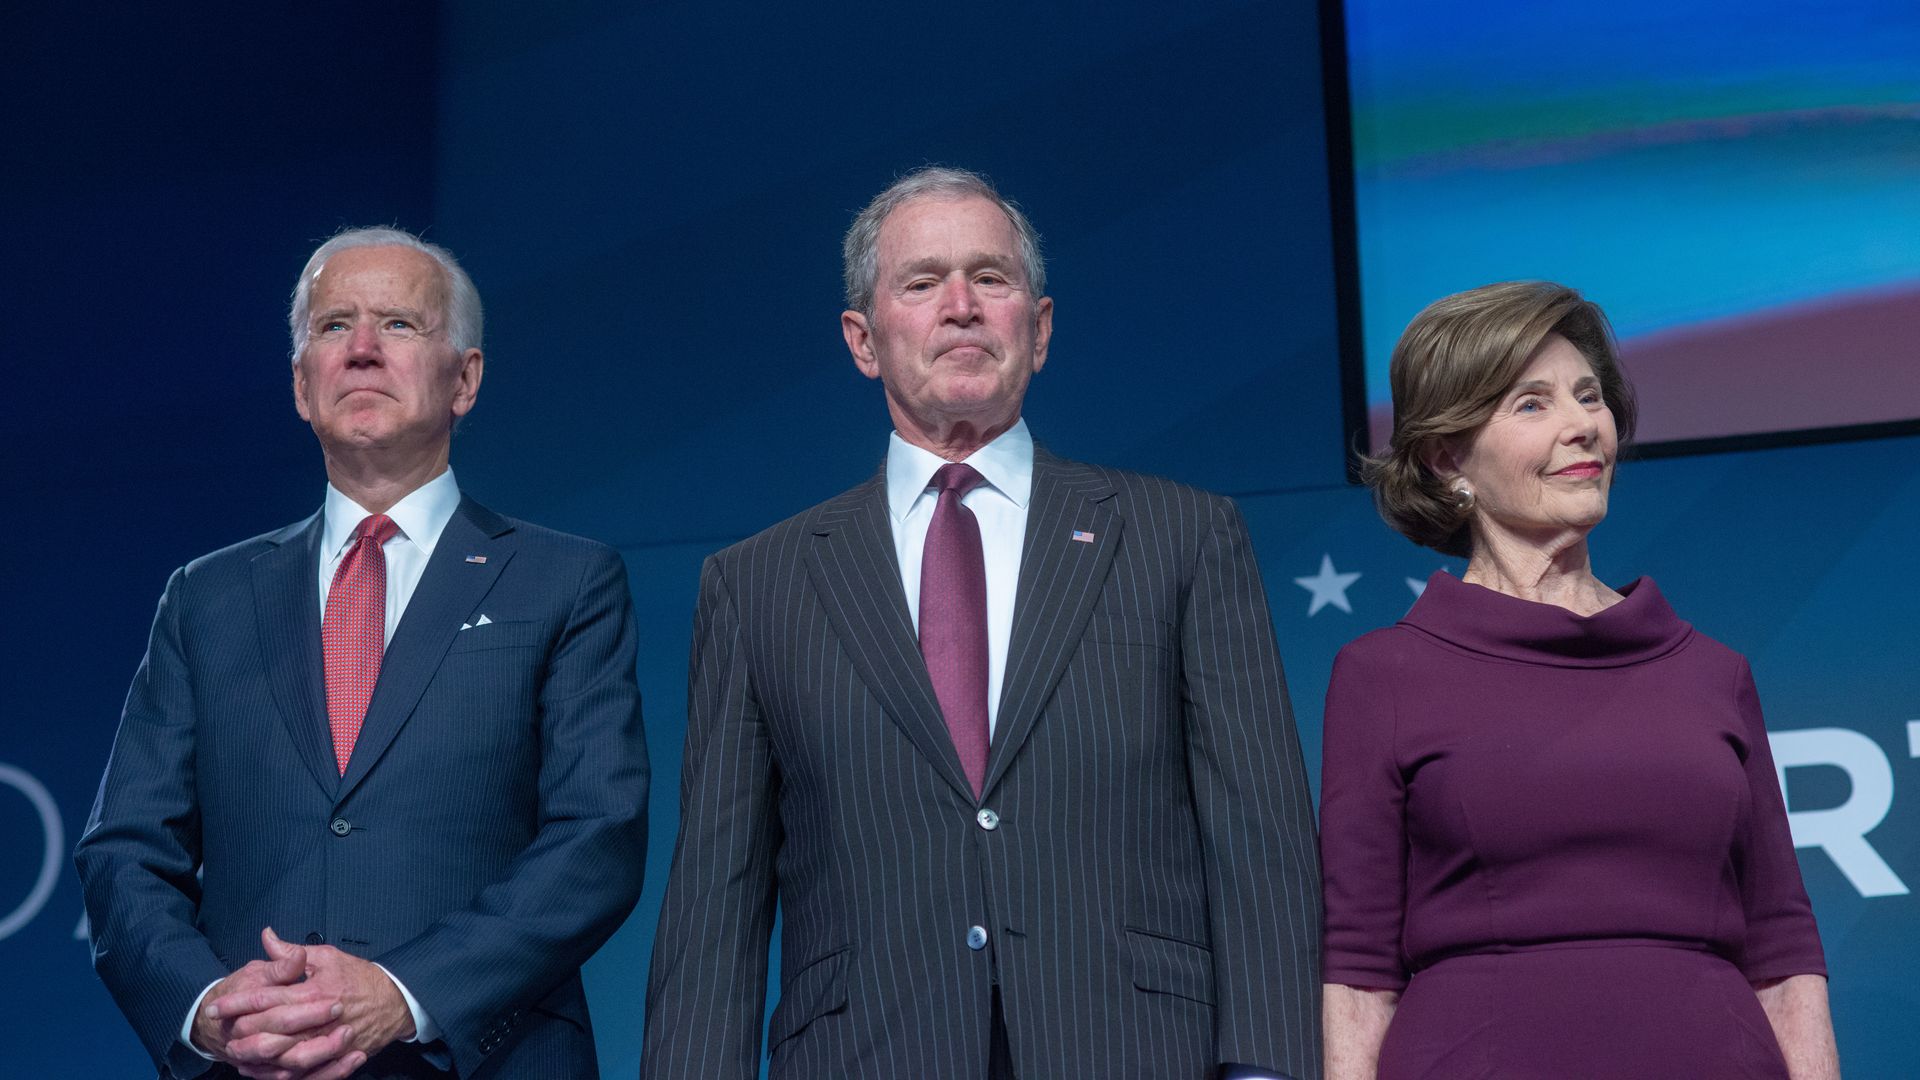 Former Vice President Joe Biden presents George W. Bush and Laura Bush the 2018 Liberty Medal at The National Constitution Center on November 11, 2018 in Philadelphia, Pennsylvania. 